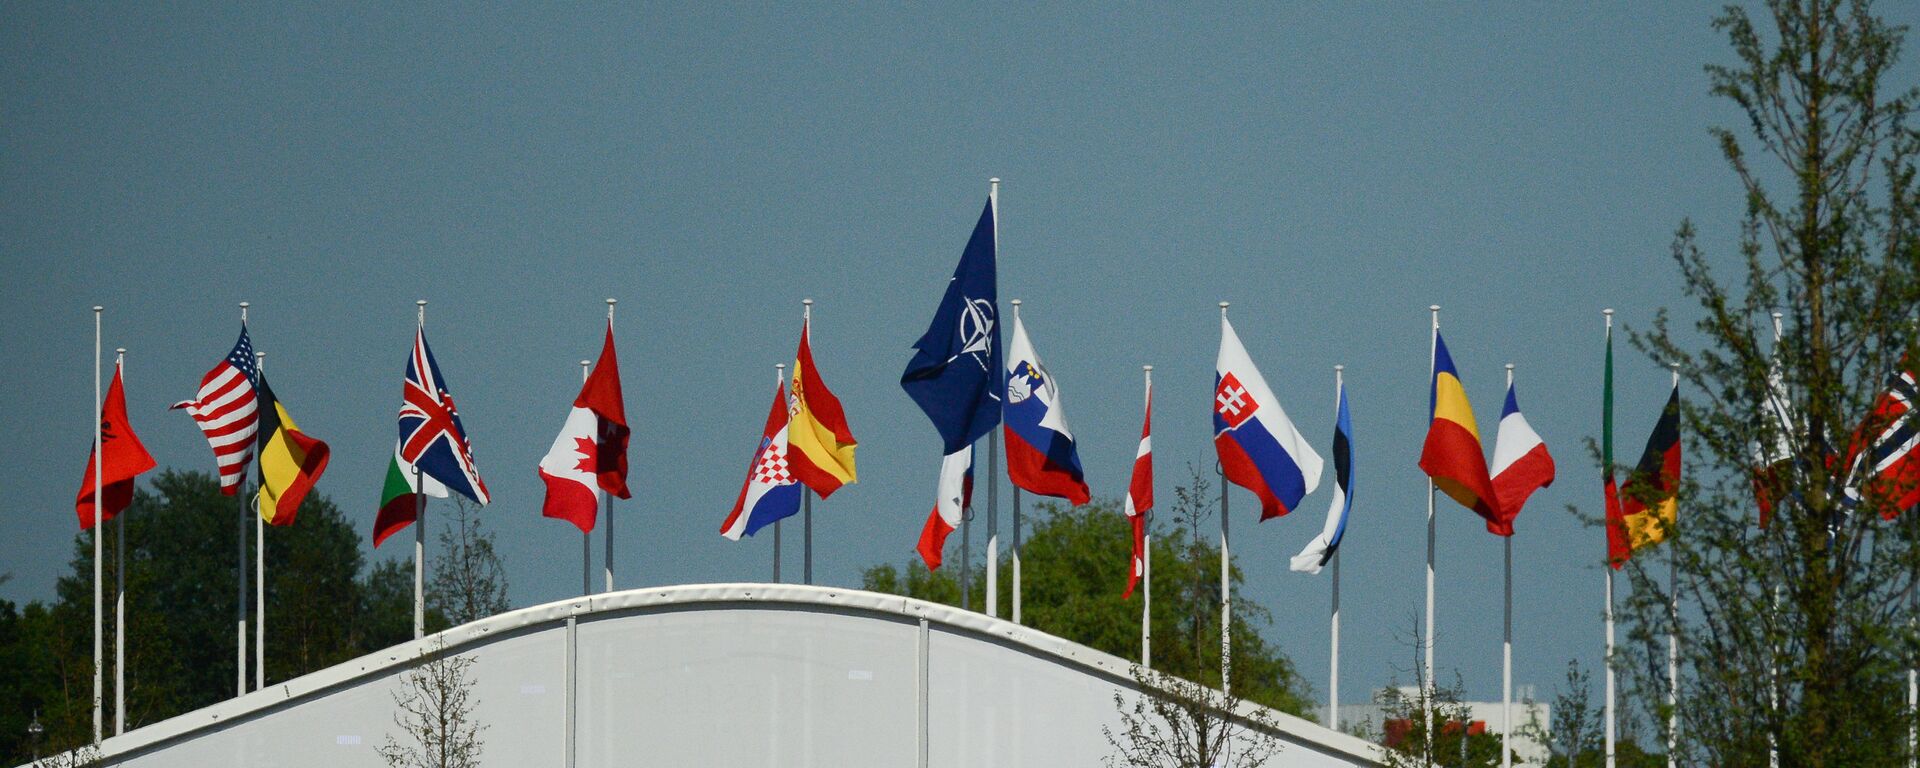 Флаги стран-участниц НАТО над офисом НАТО в Брюсселе, архивное фото - Sputnik Таджикистан, 1920, 30.03.2018